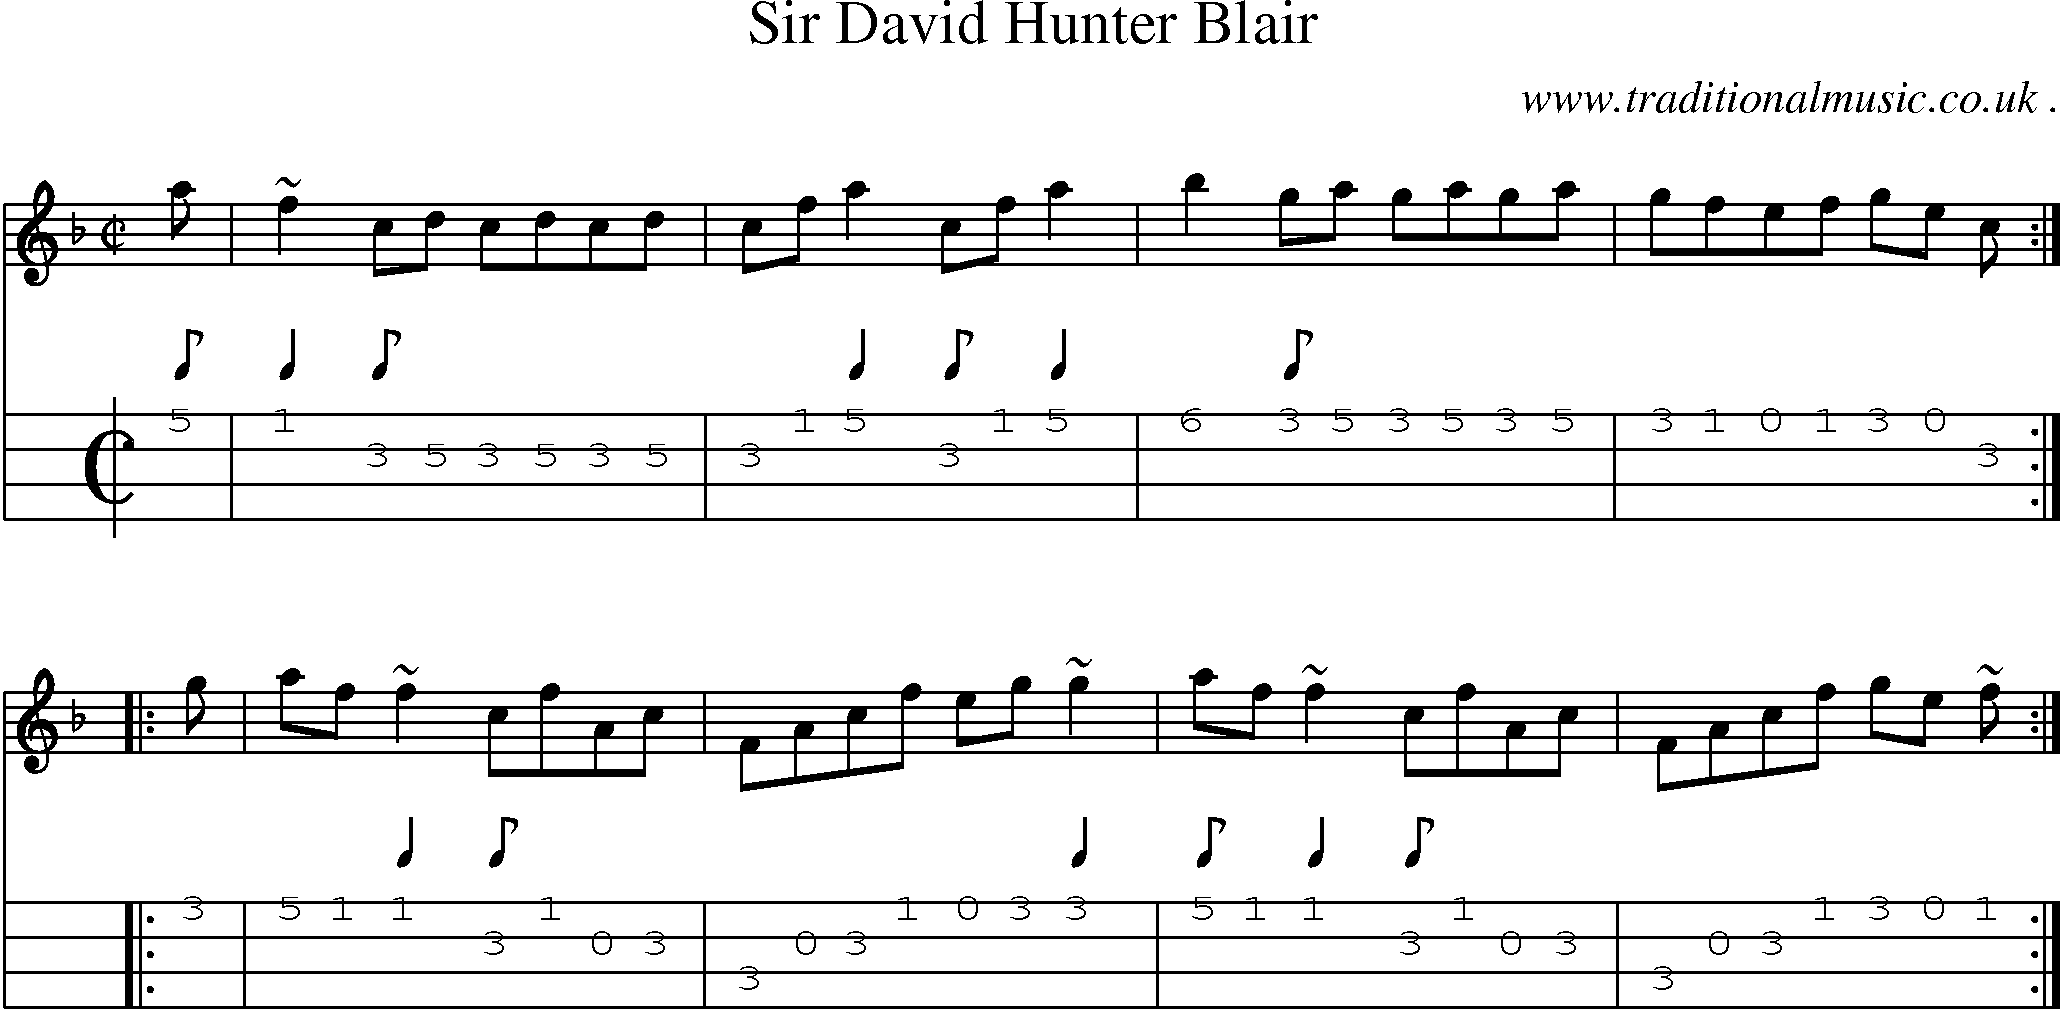 Sheet-music  score, Chords and Mandolin Tabs for Sir David Hunter Blair